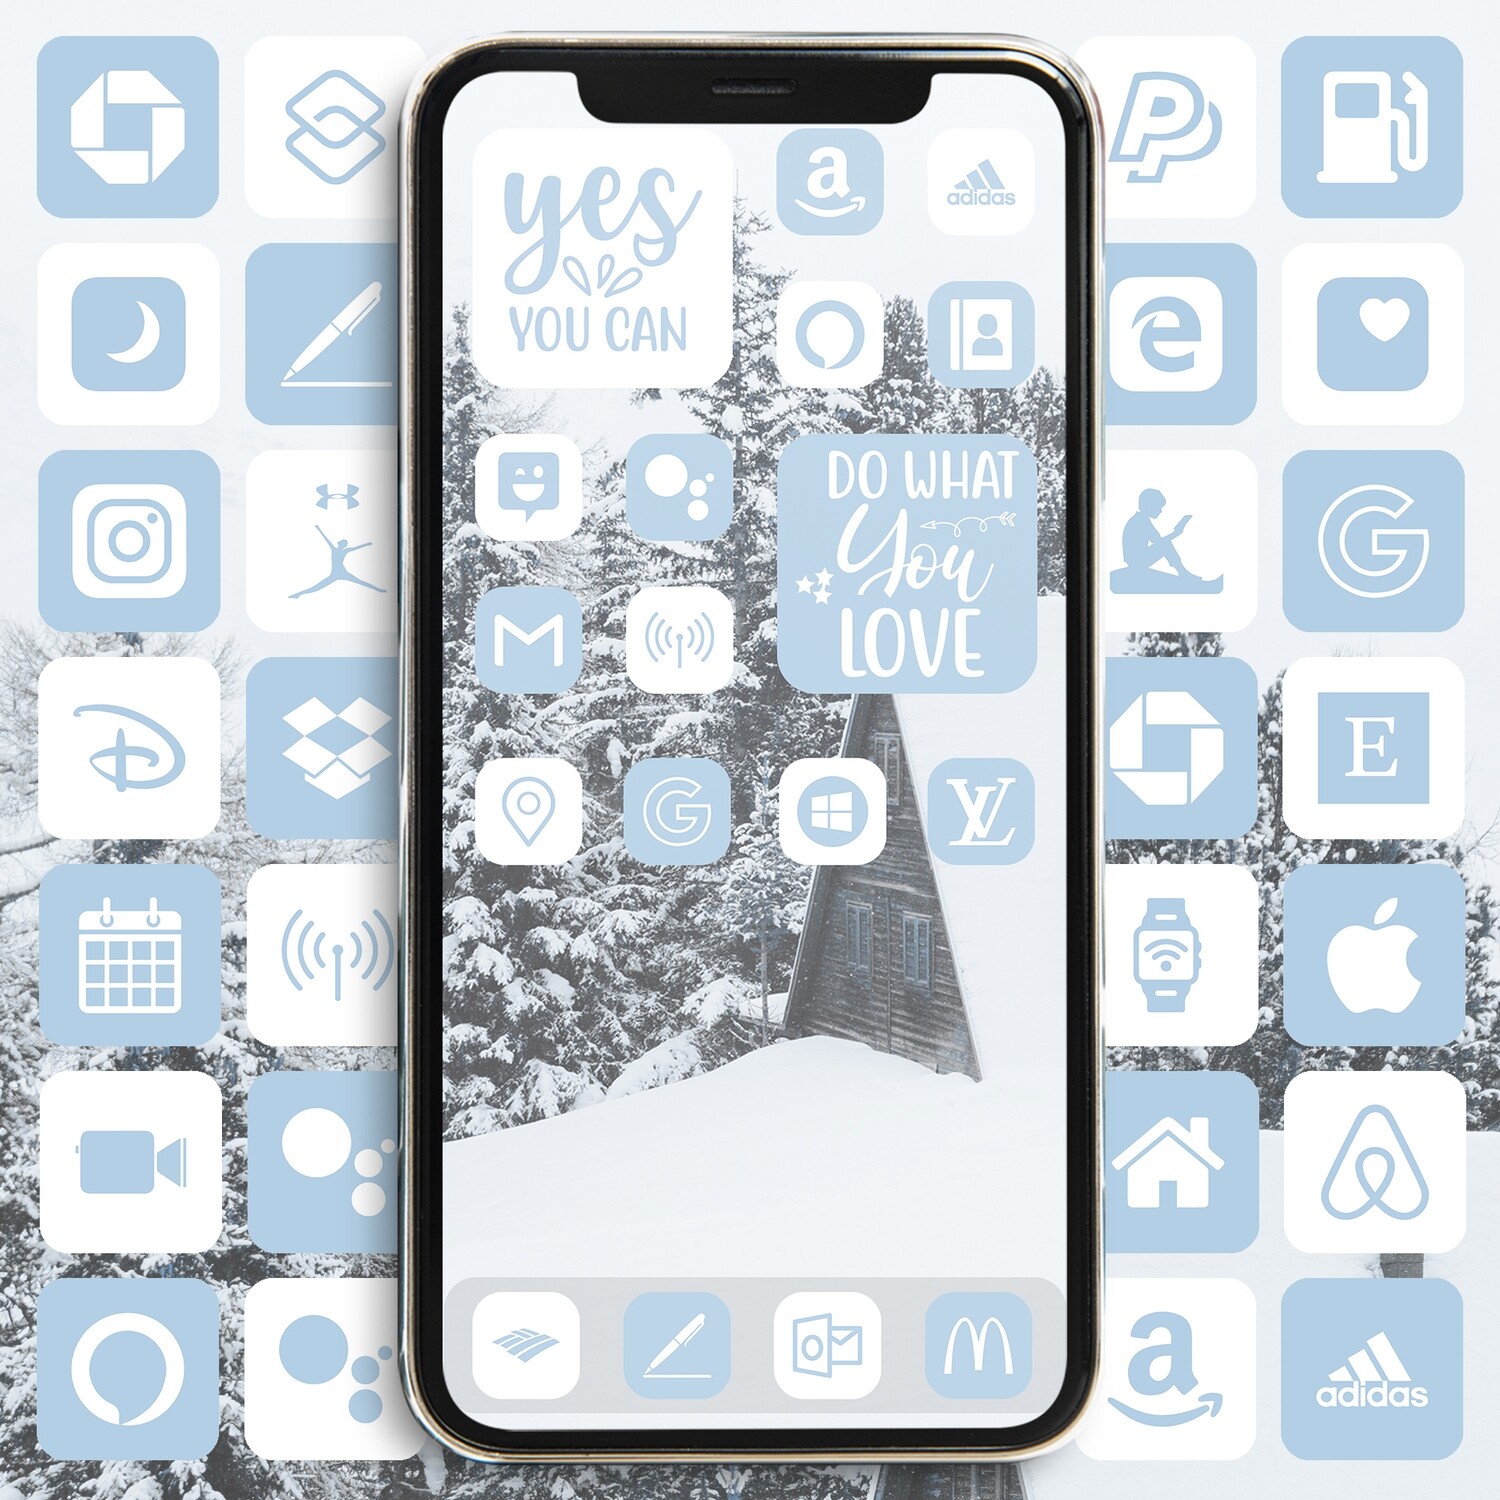 Sierra Blue app icons ios 15 icons aesthetic